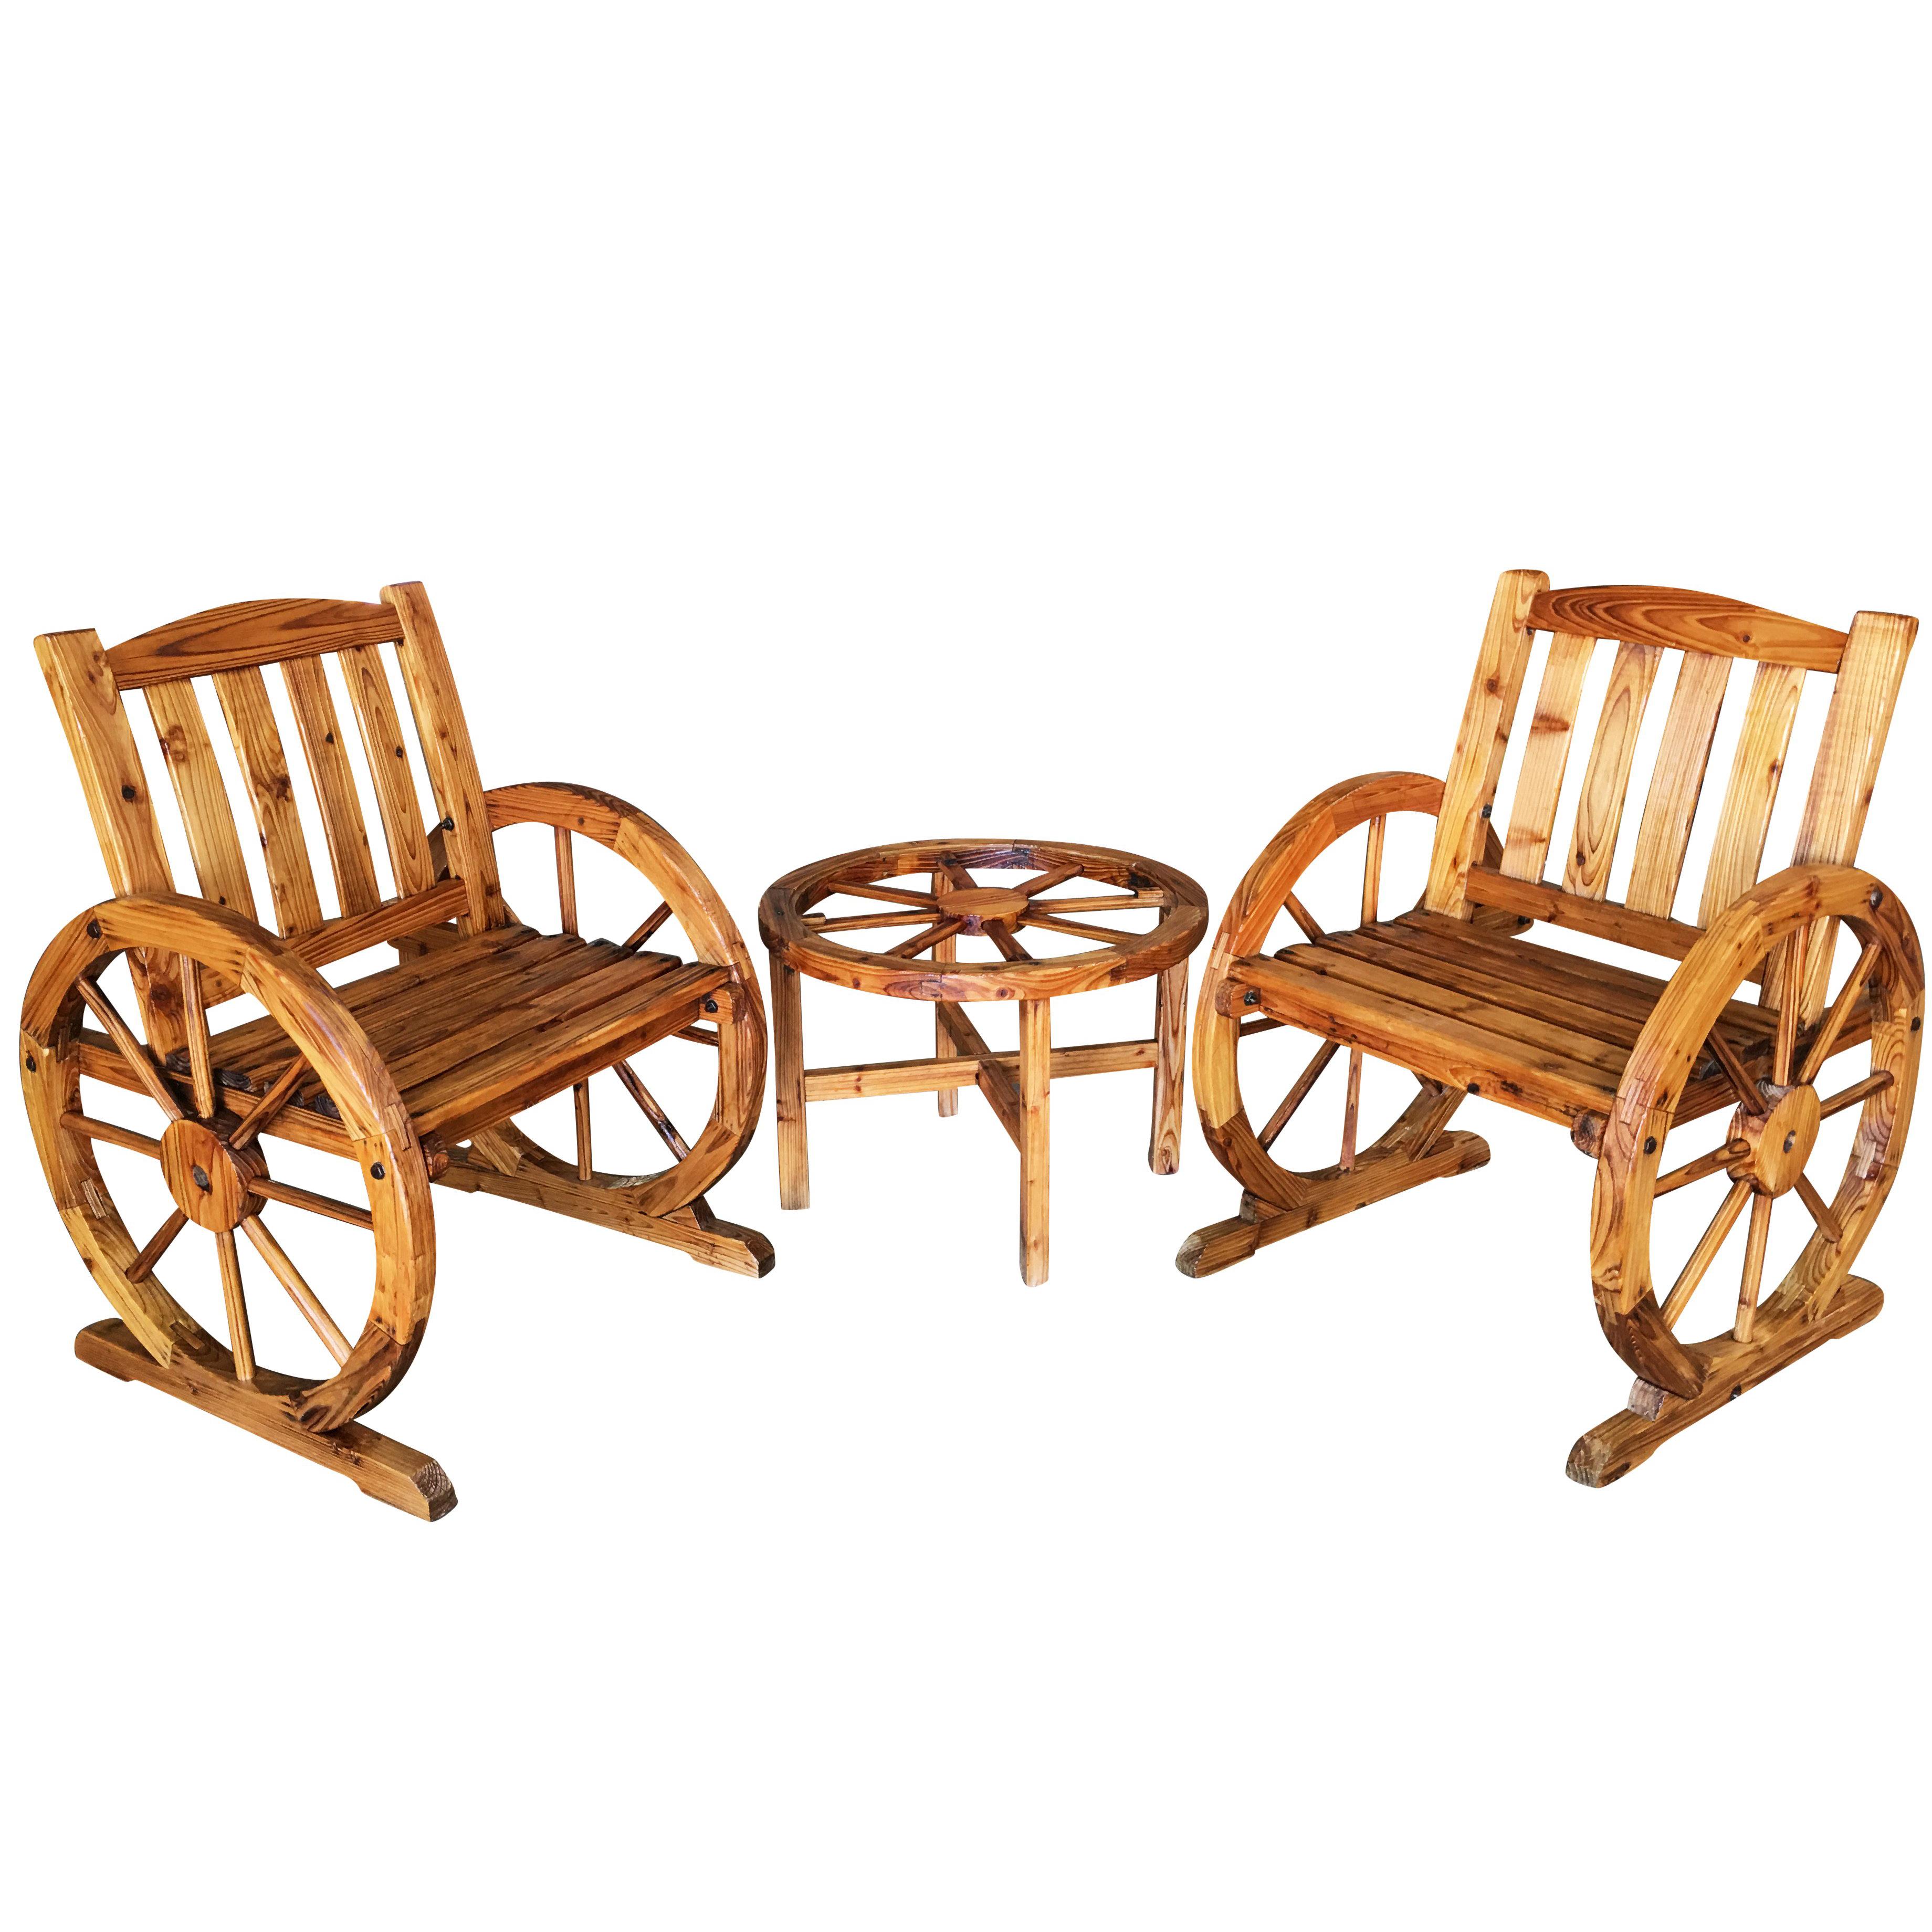 Western Folk Art Wagon Wheel Table and Chairs Set, 1960